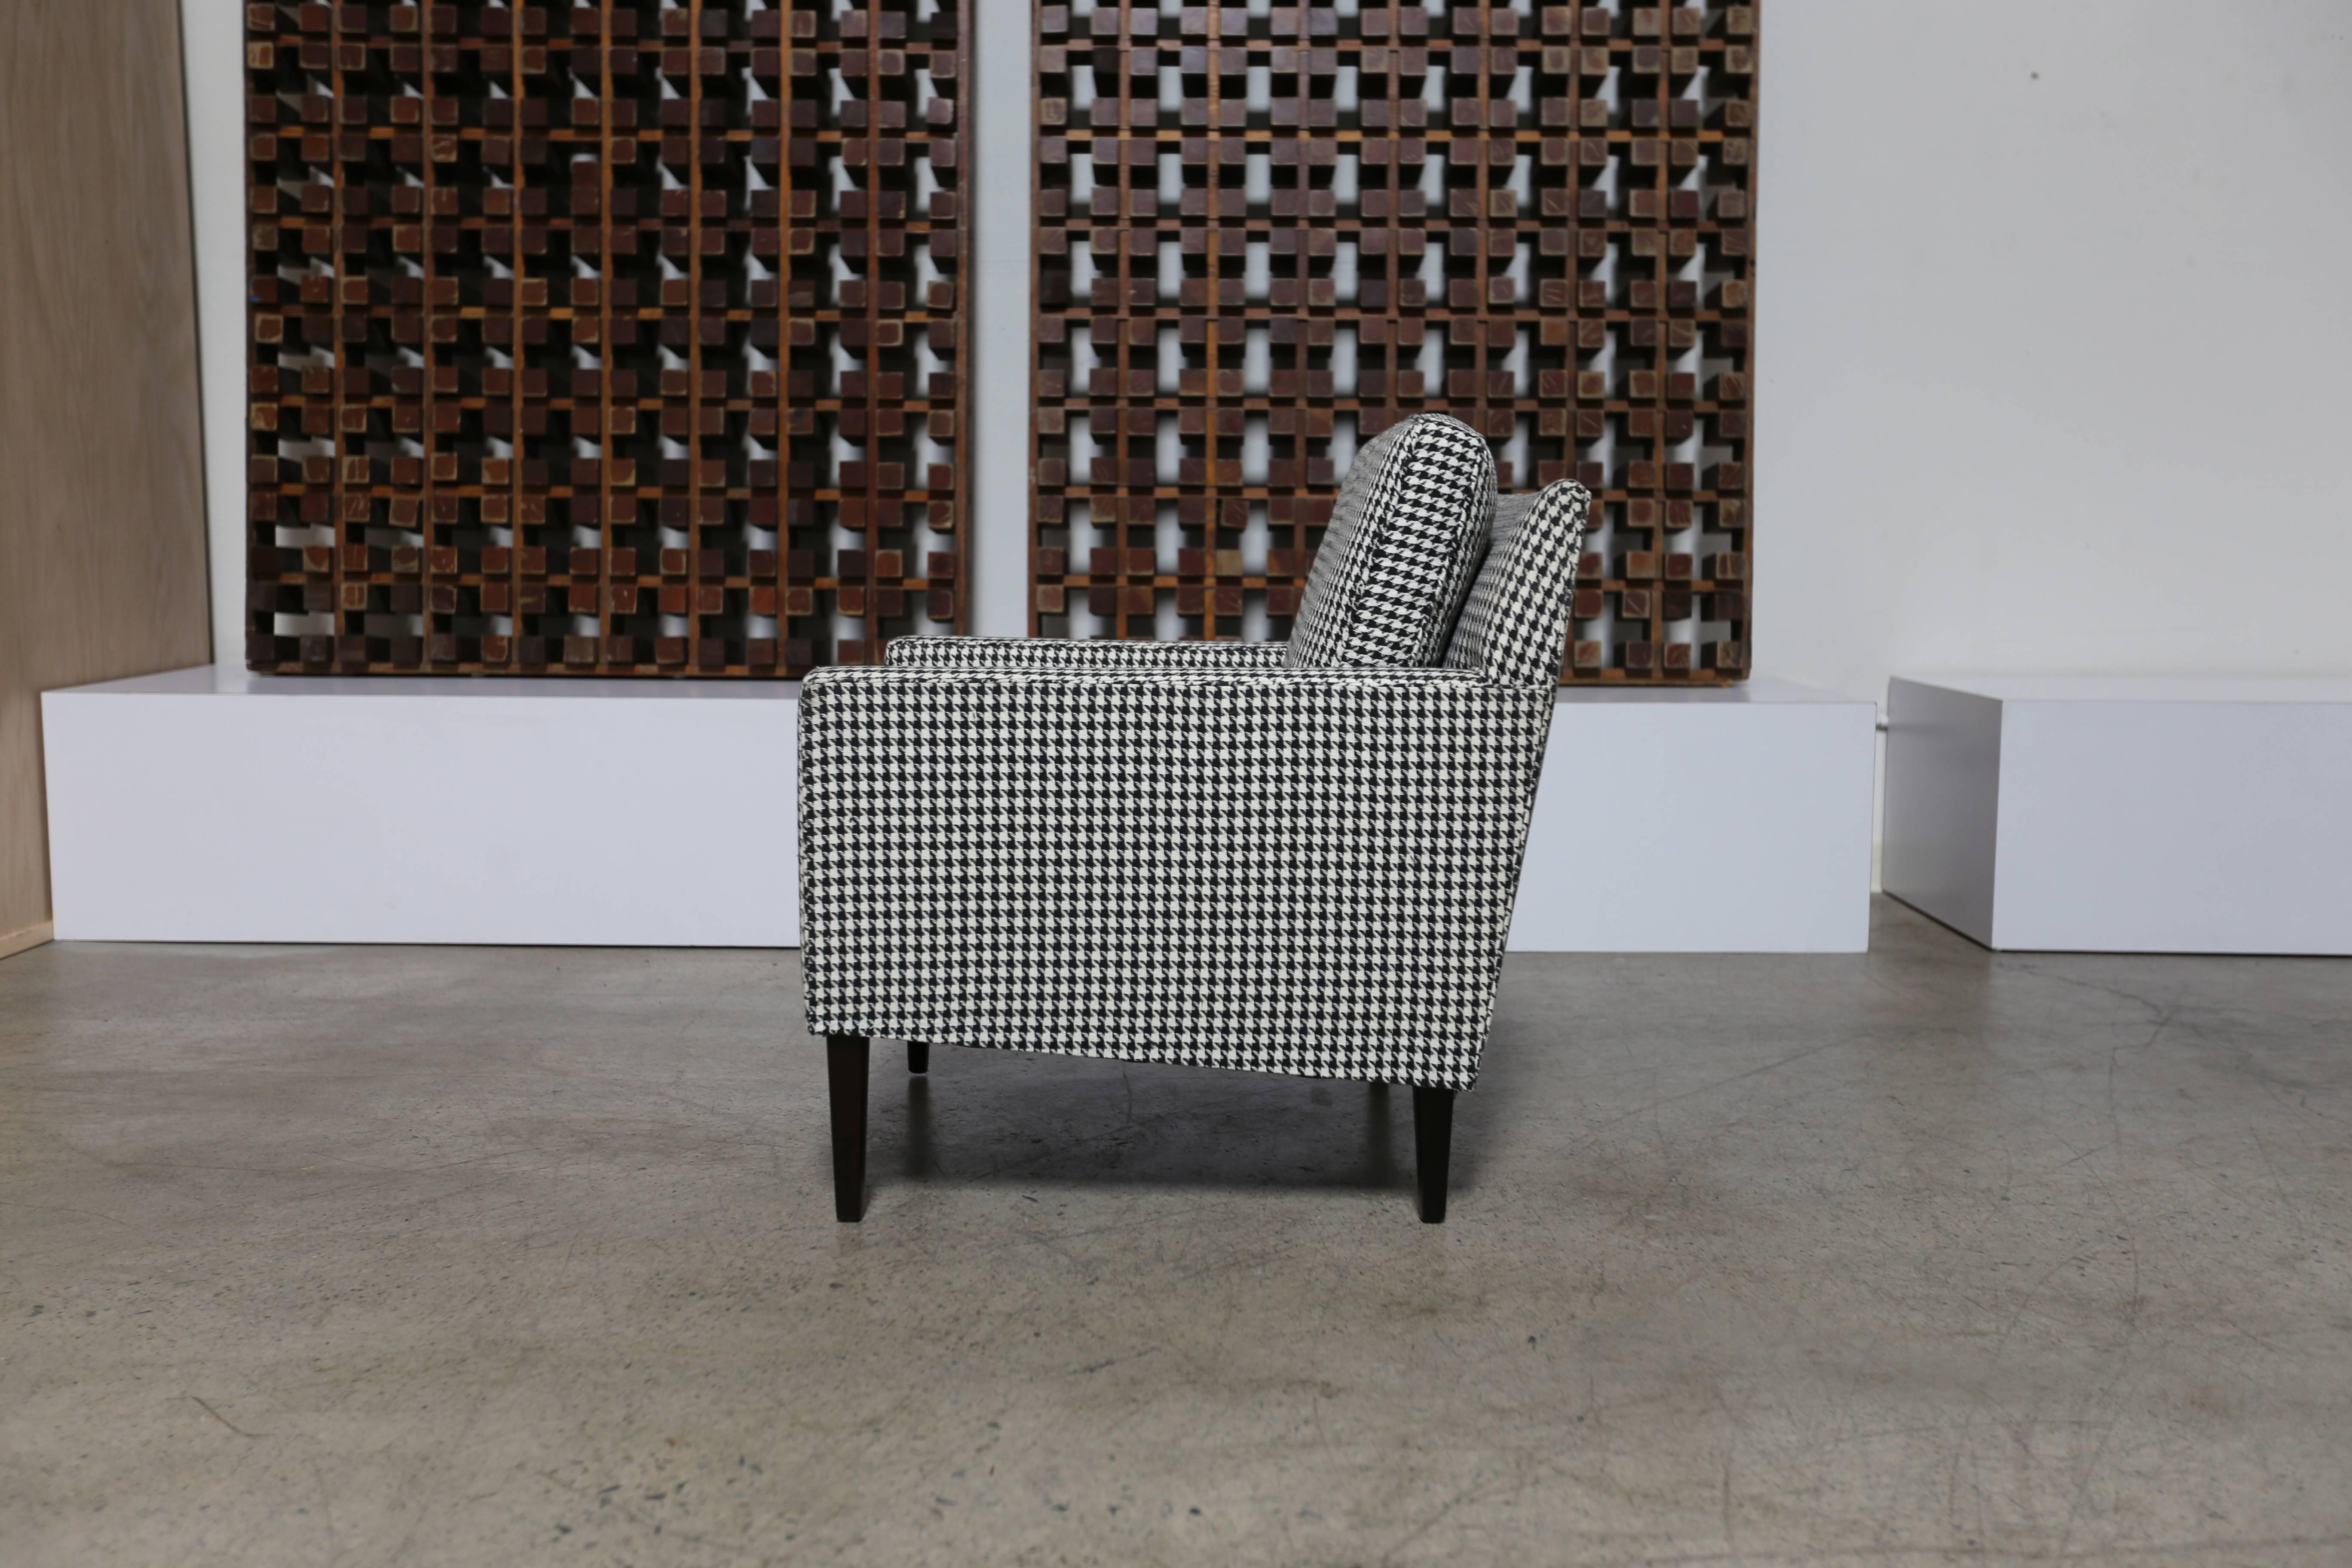 Lounge chair by Edward Wormley for Dunbar.